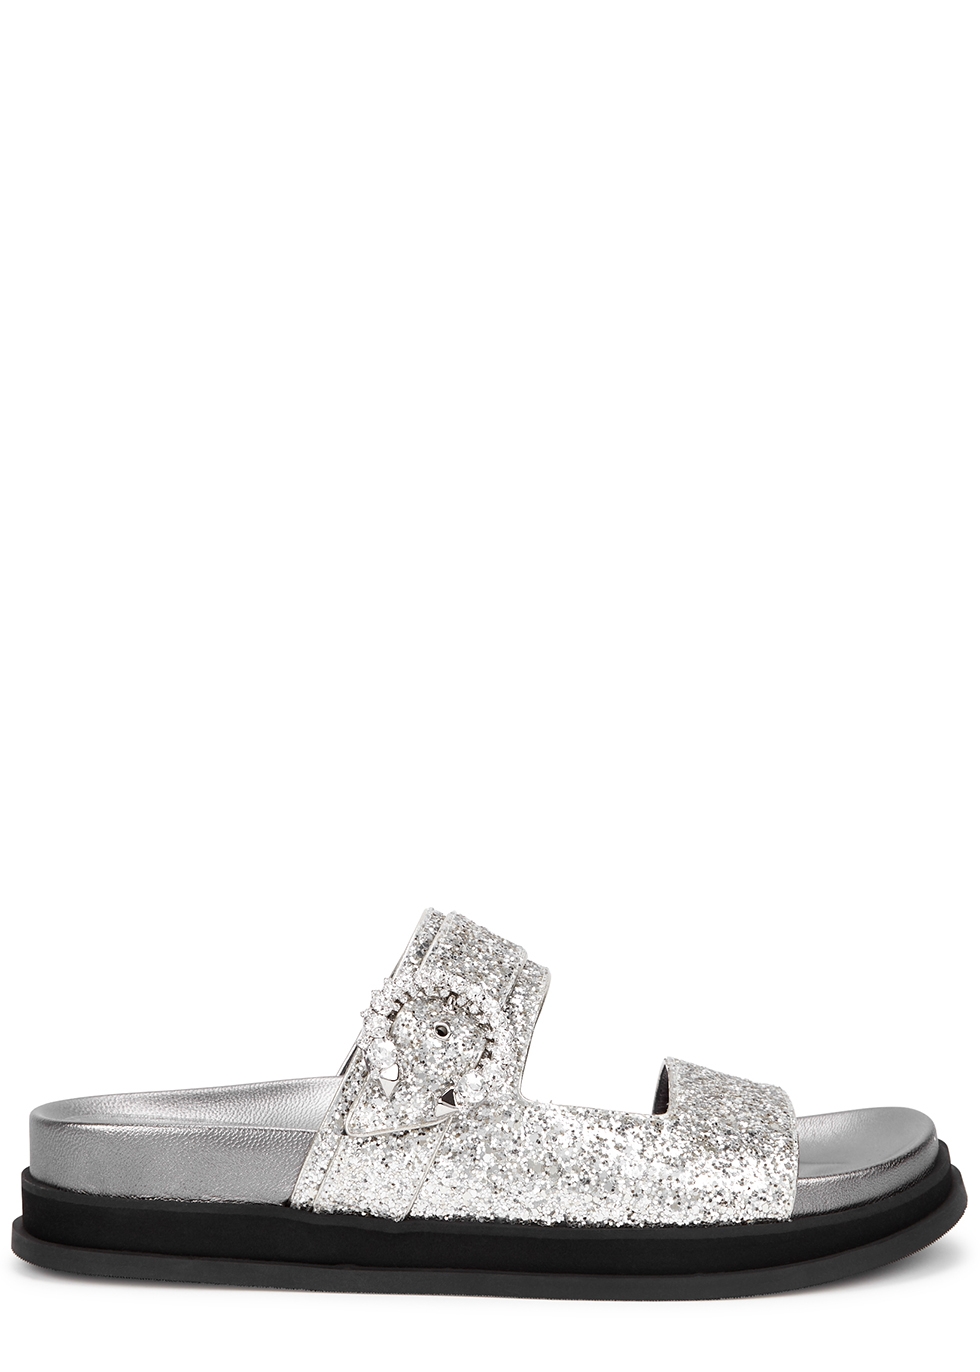 Marga silver glittered sandals